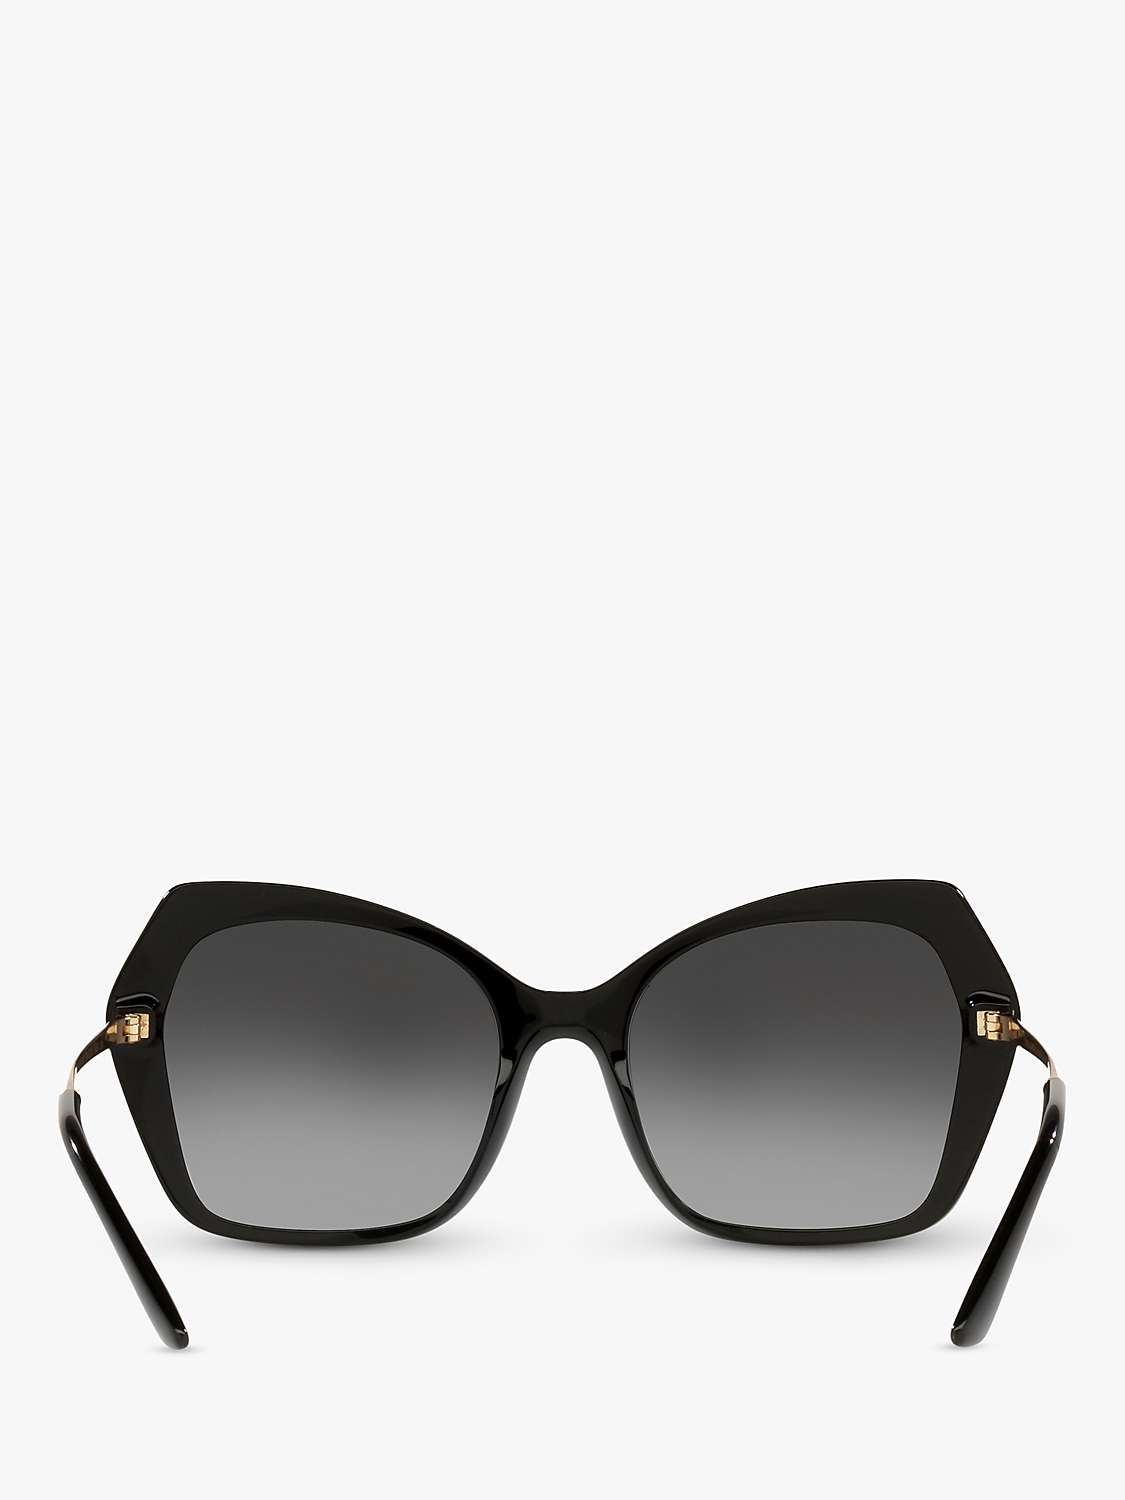 Buy Dolce & Gabbana DG4399 Women's Butterfly Sunglasses, Black/Grey Gradient Online at johnlewis.com